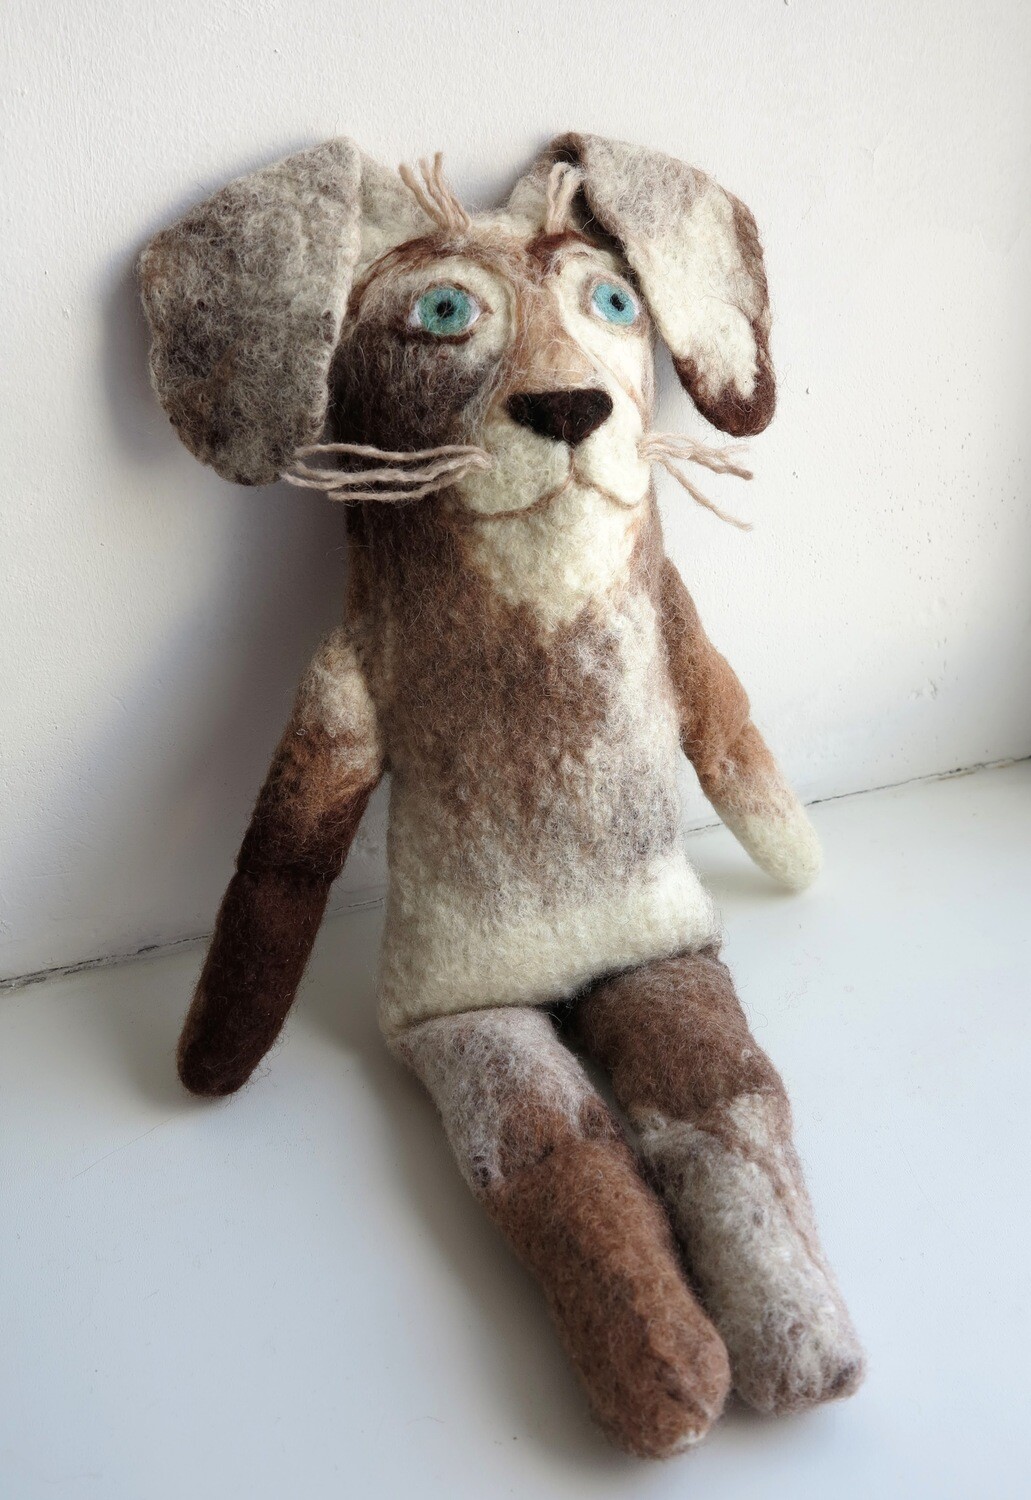 Felted stuffed animals - Handmade from wool